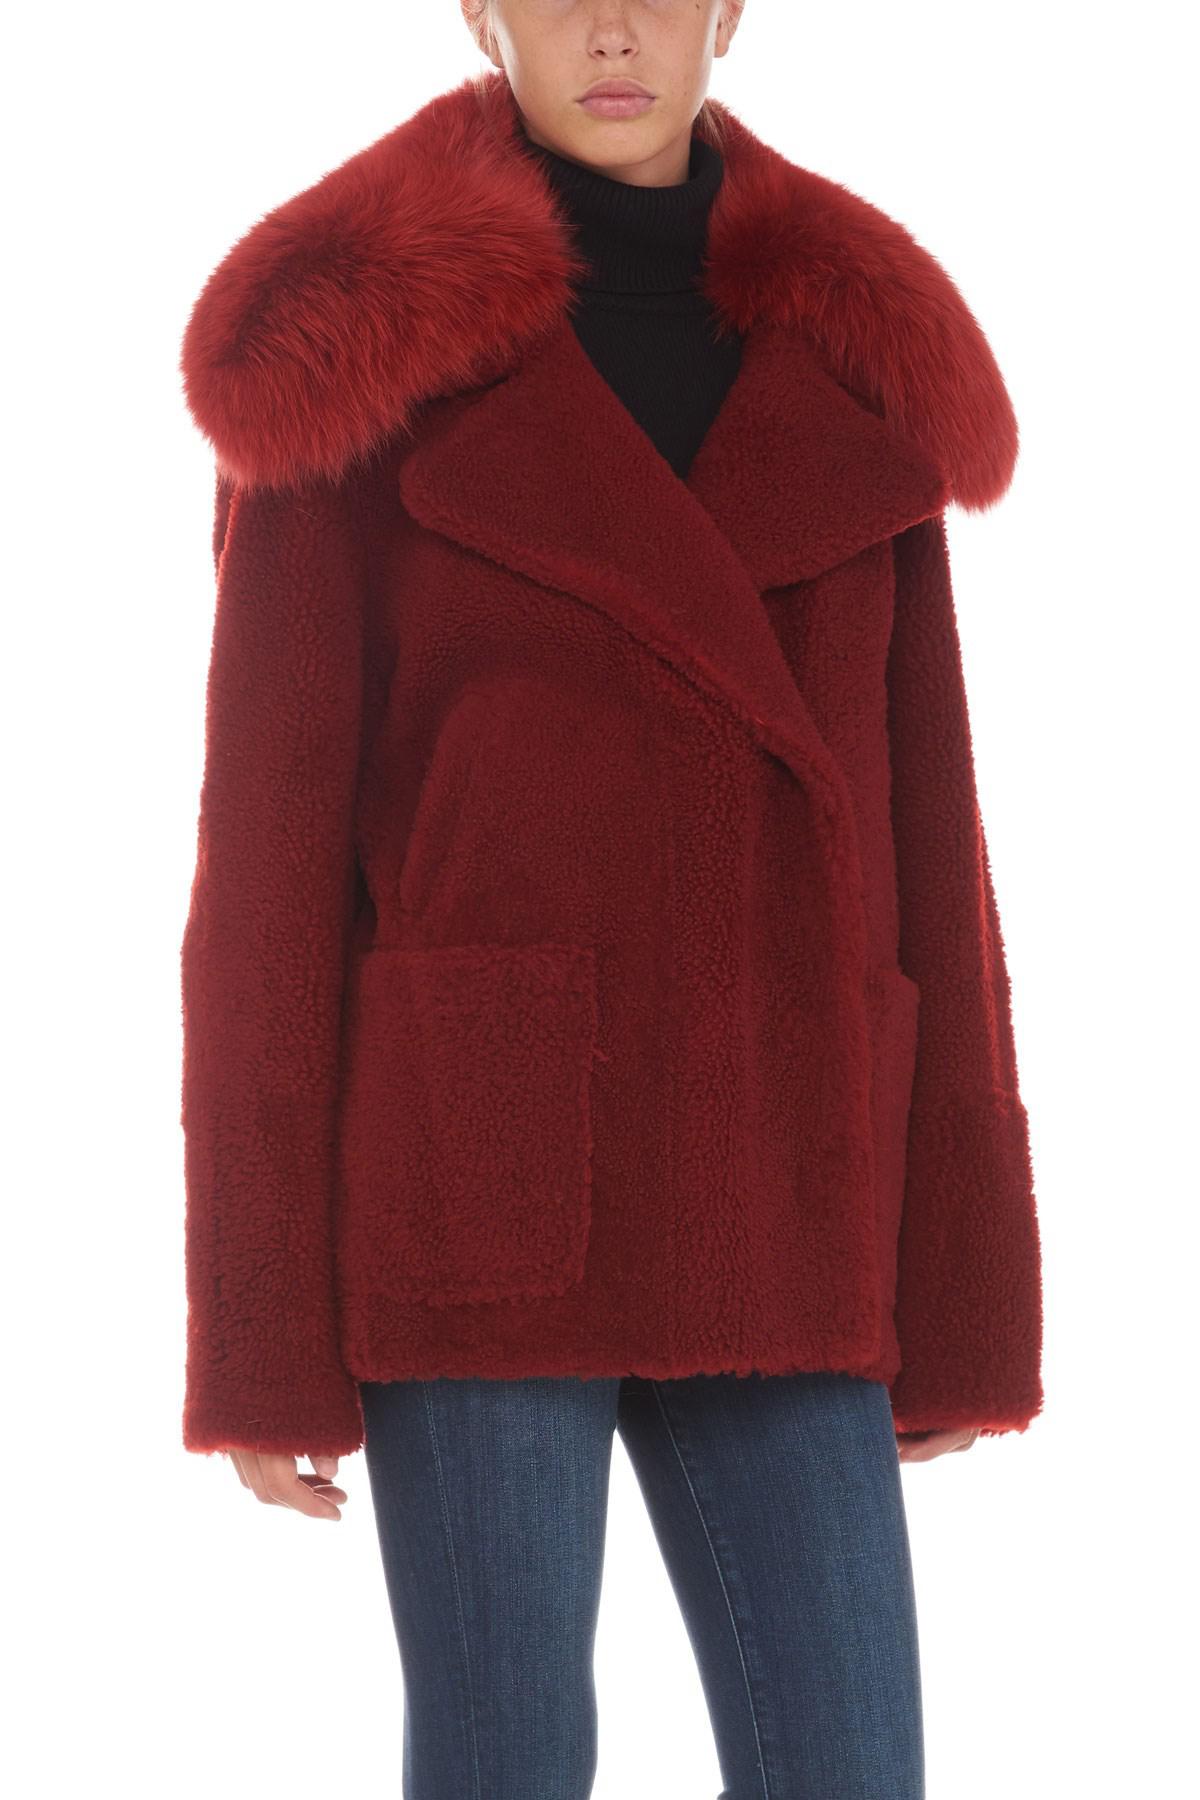 Lyst - Yves Salomon Shearling Fur in Red